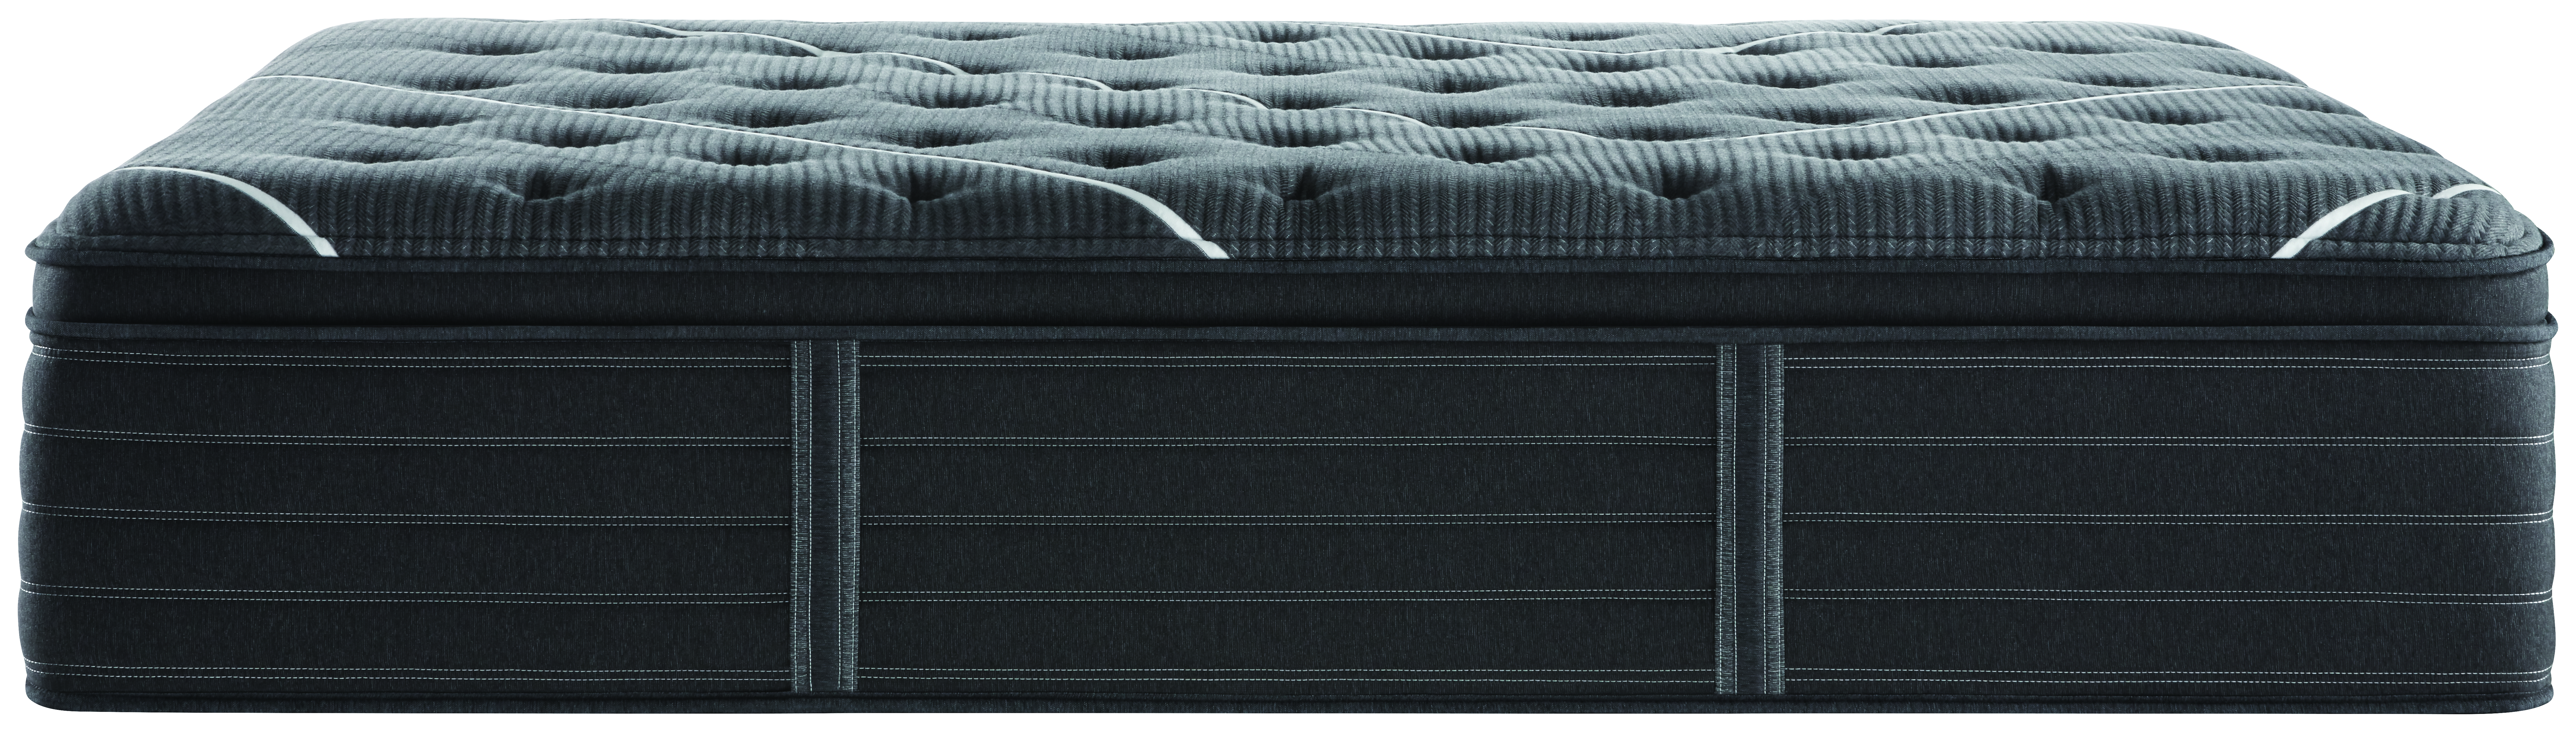 product image of Beautyrest Black 700810884-1050 mattress